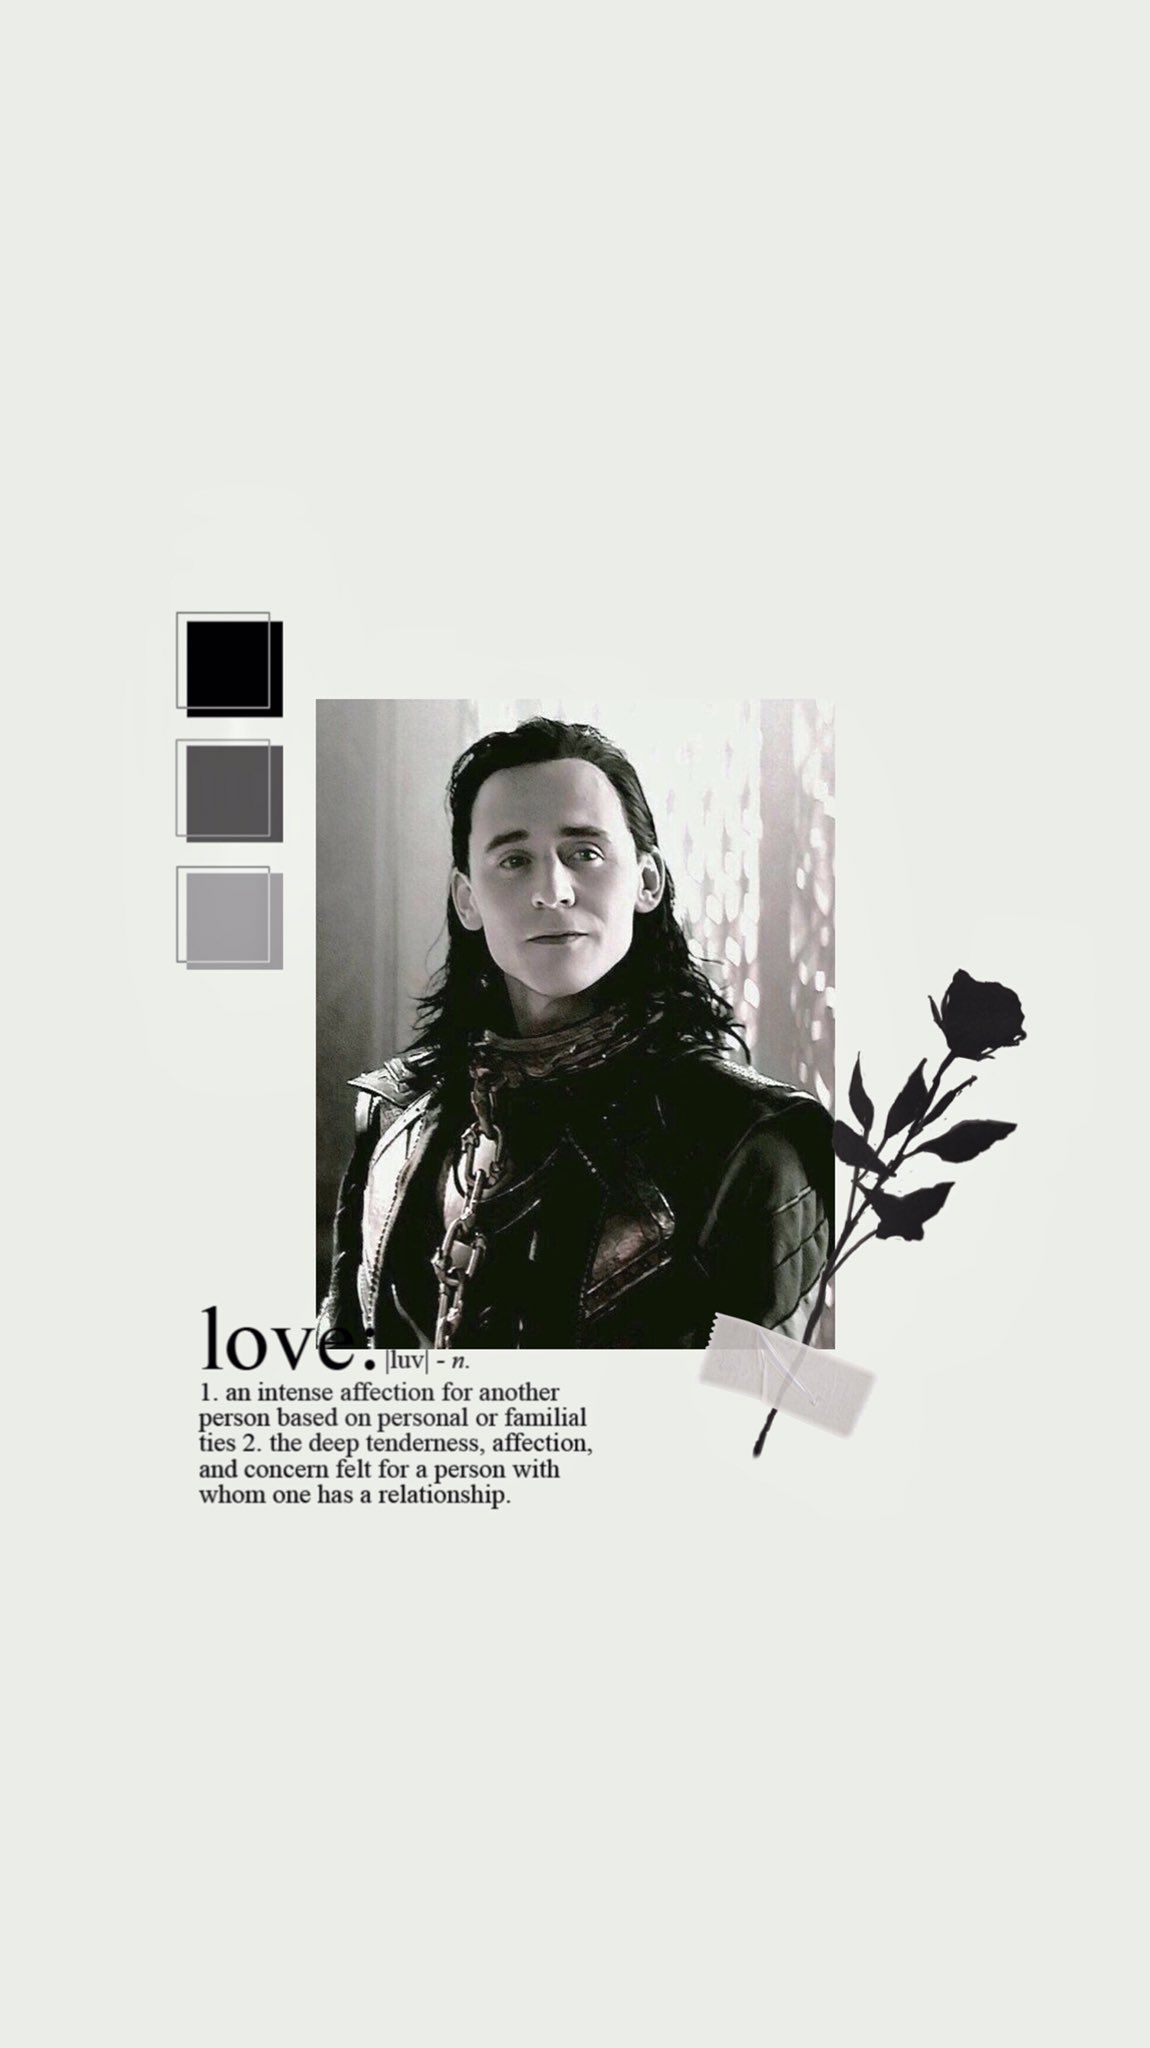 Wallpaper & Headers on Twitter. Loki wallpaper, Loki aesthetic, Loki marvel